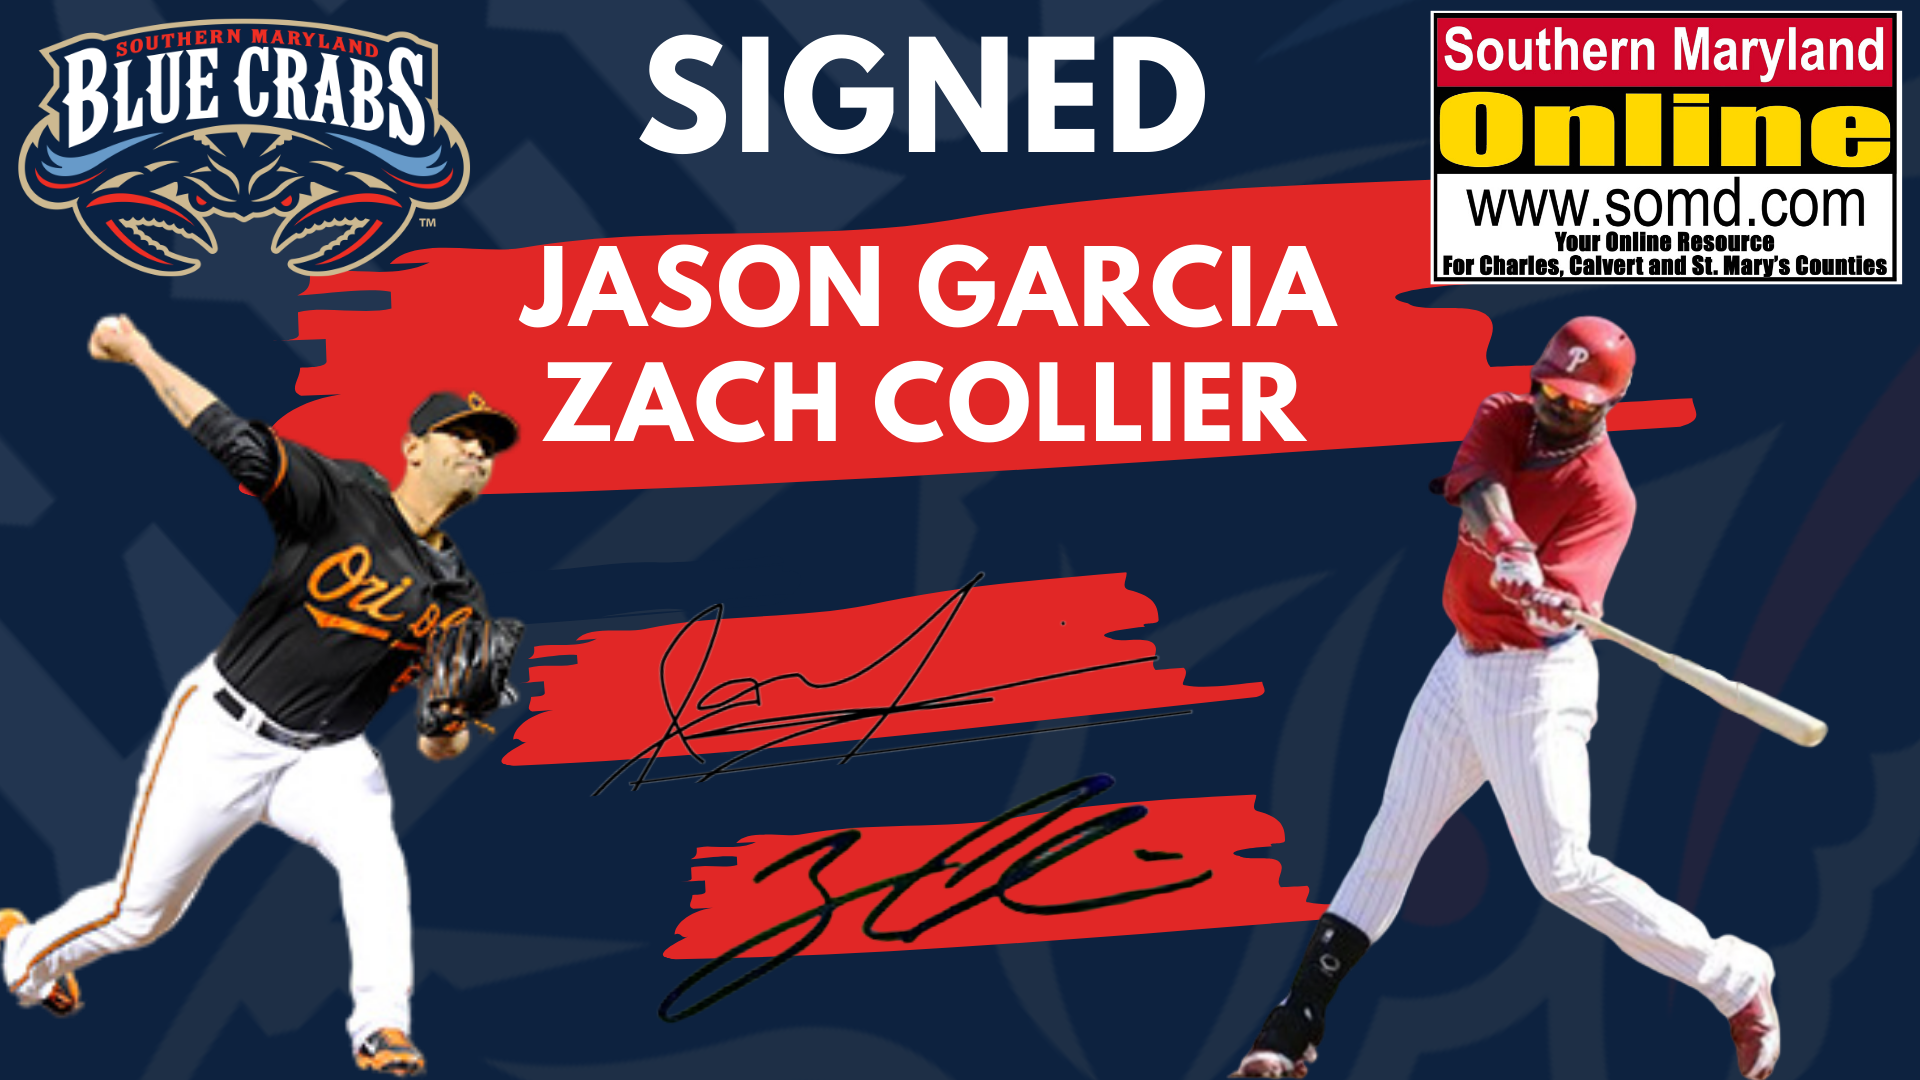 Former Oriole Jason Garcia, Outfielder Zach Collier Sign With Blue Crabs